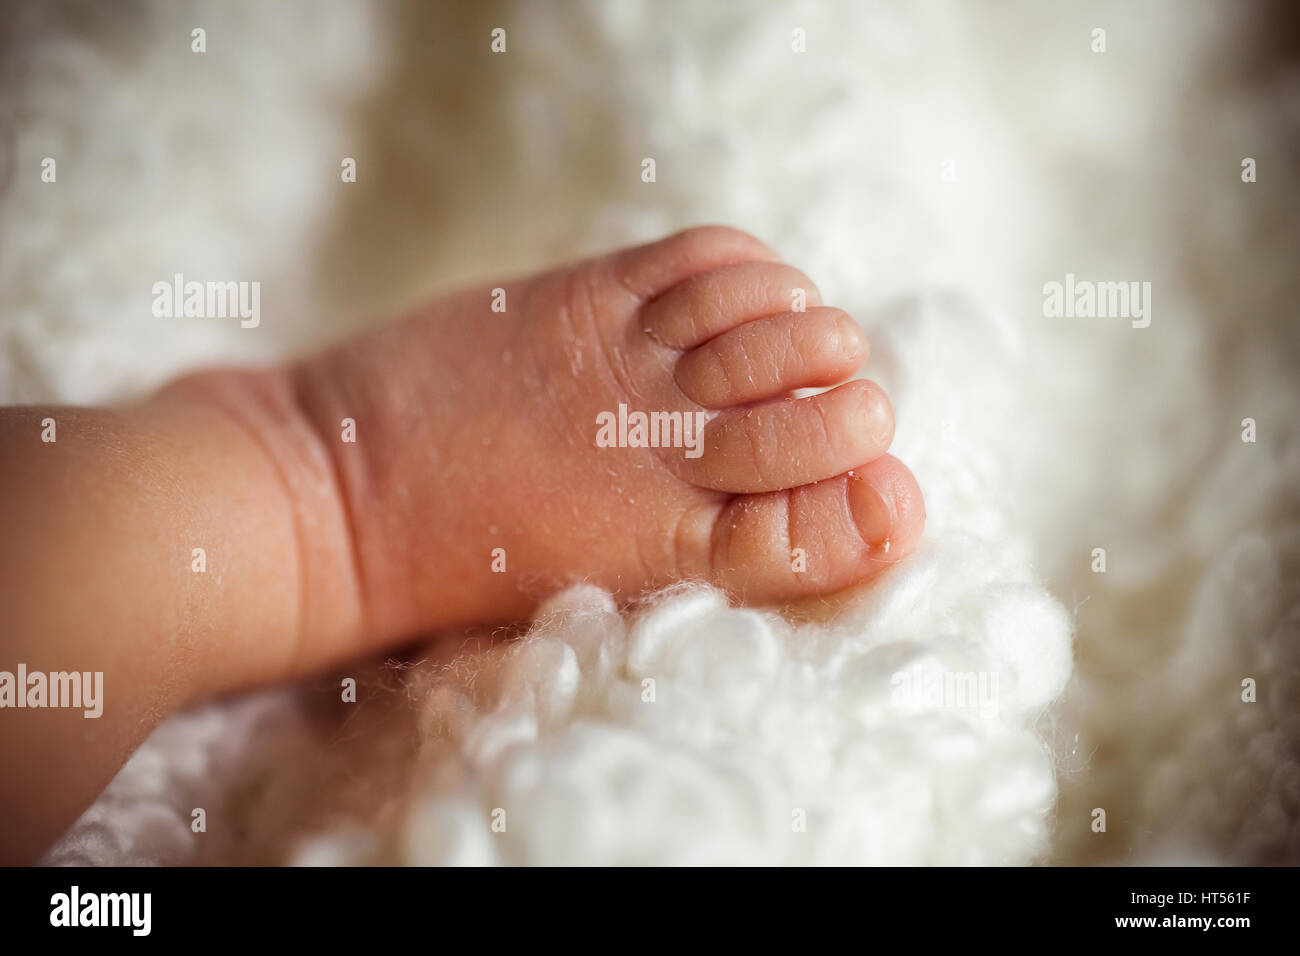 Leg of newborn kid in knitted blanket Stock Photo